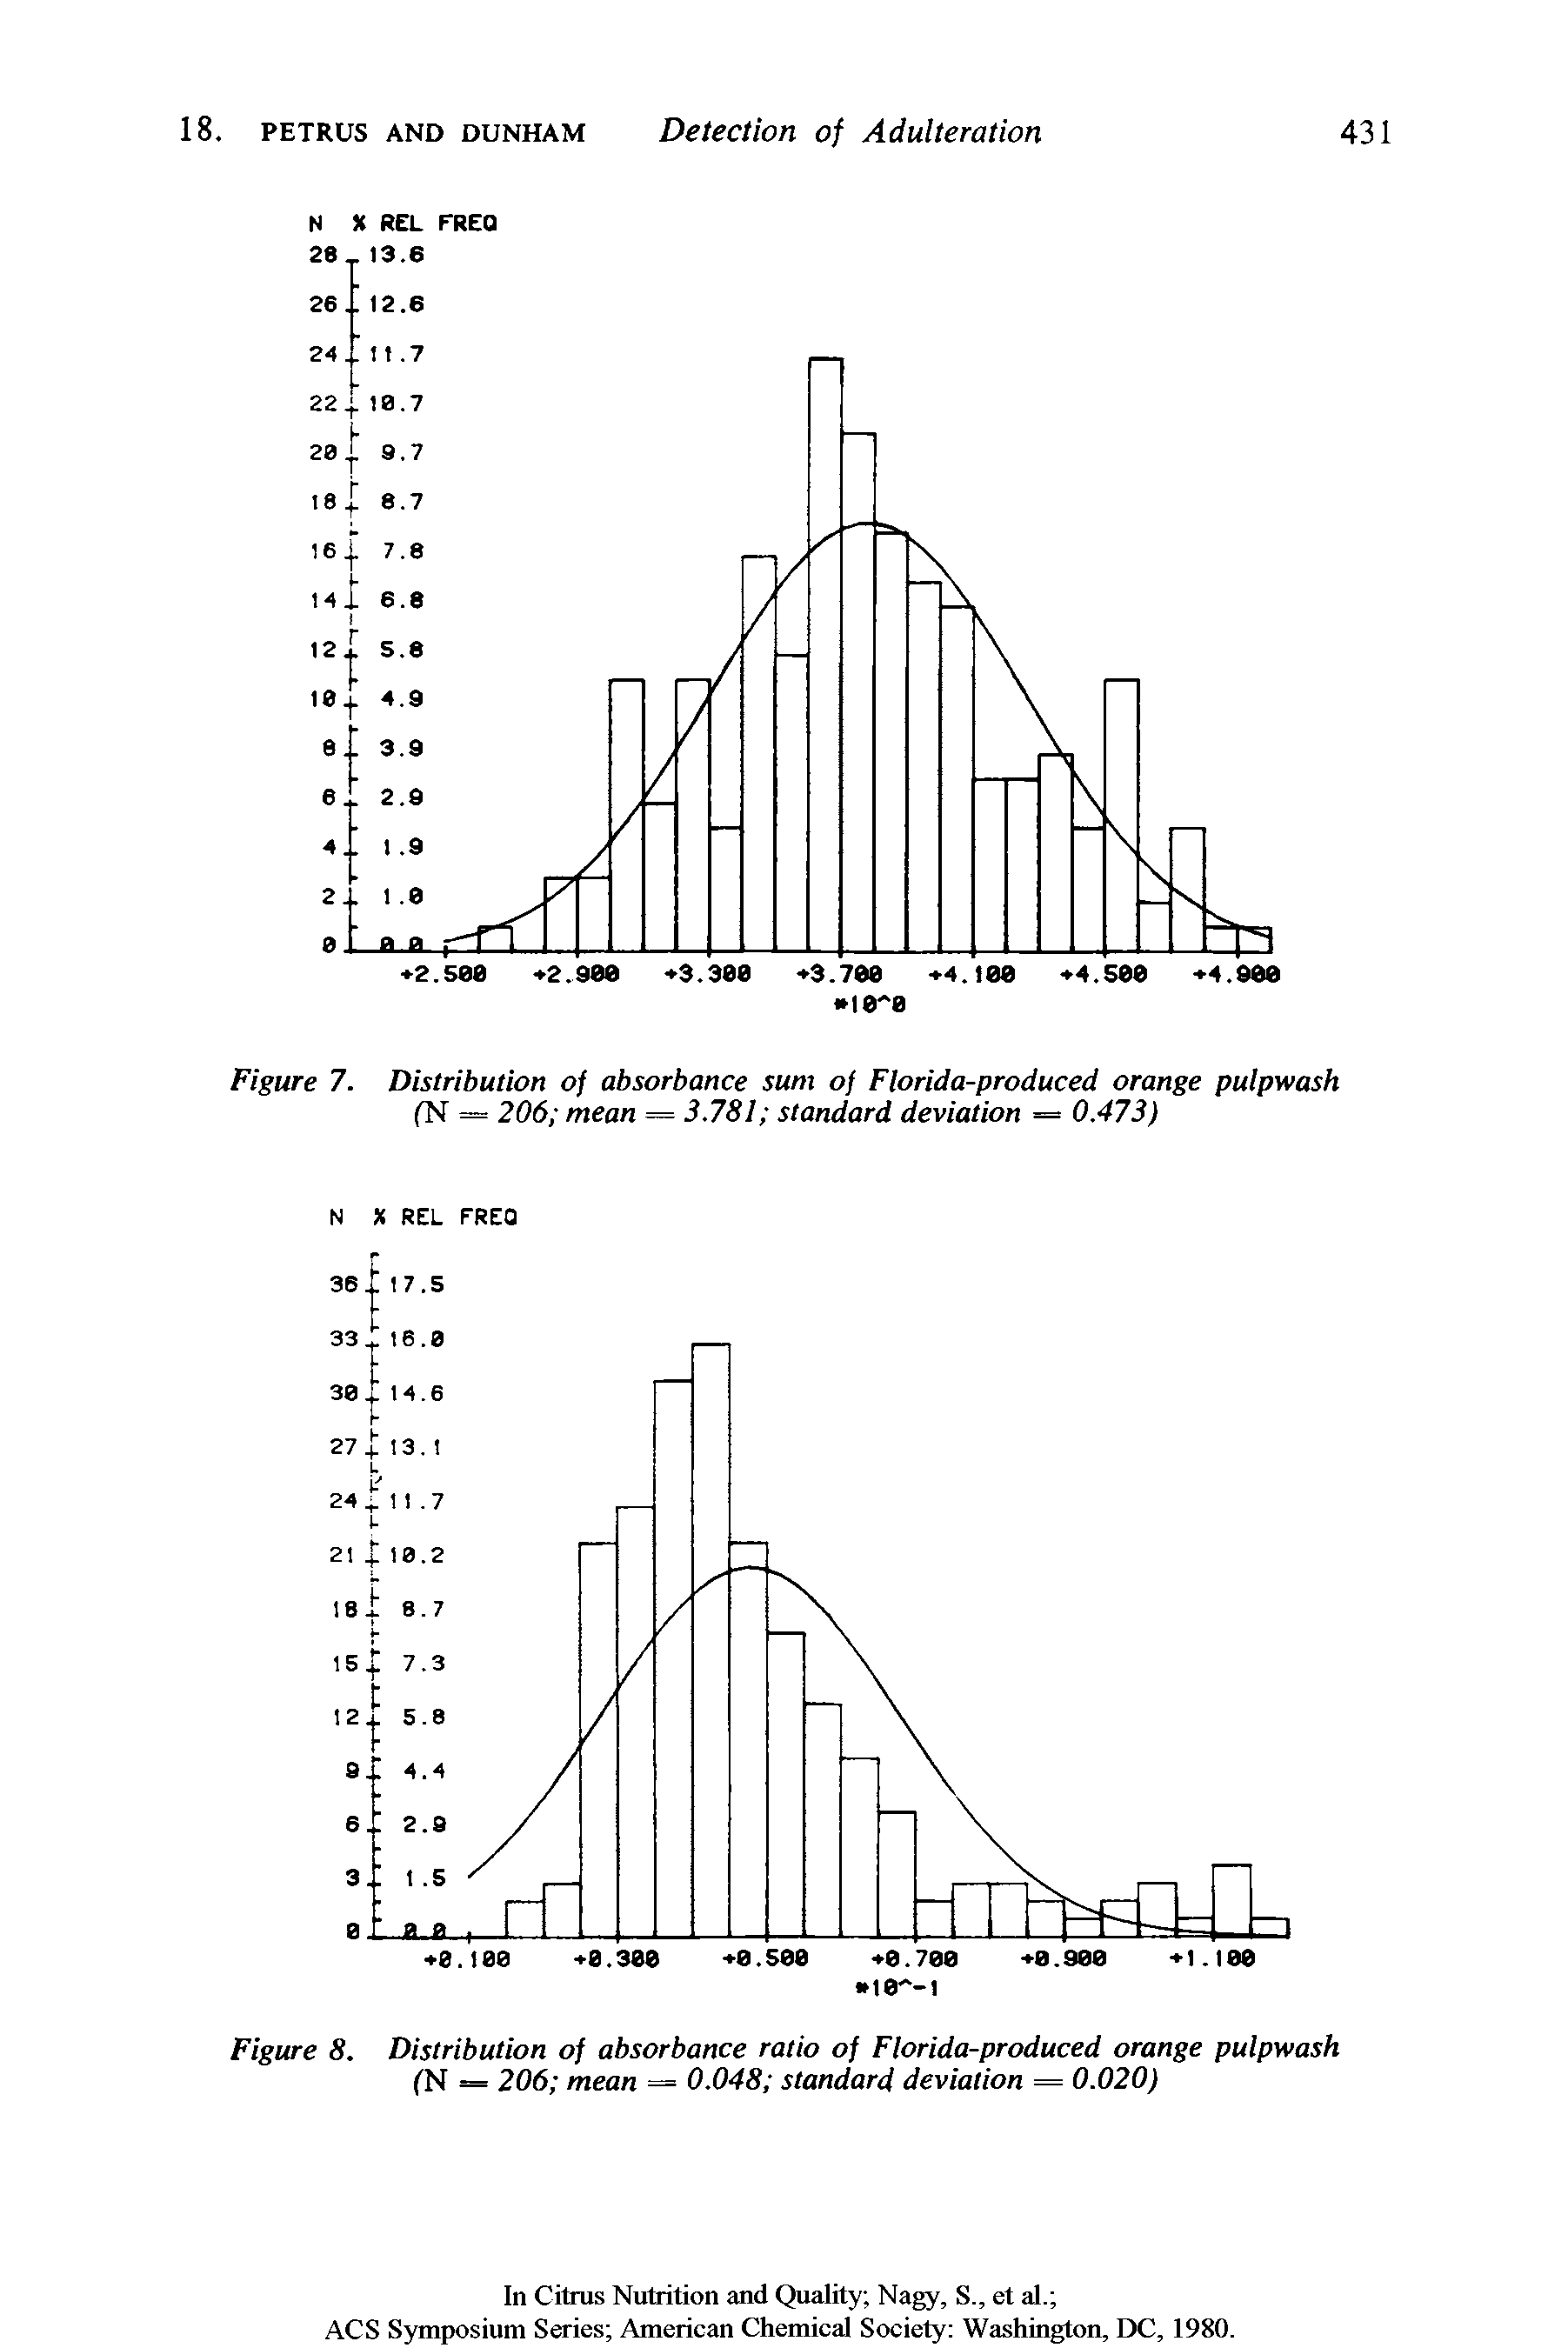 Figure 7. Distribution of absorbance sum of Florida-produced orange pulpwash (N = 206 mean = 3.781 standard deviation = 0.473)...